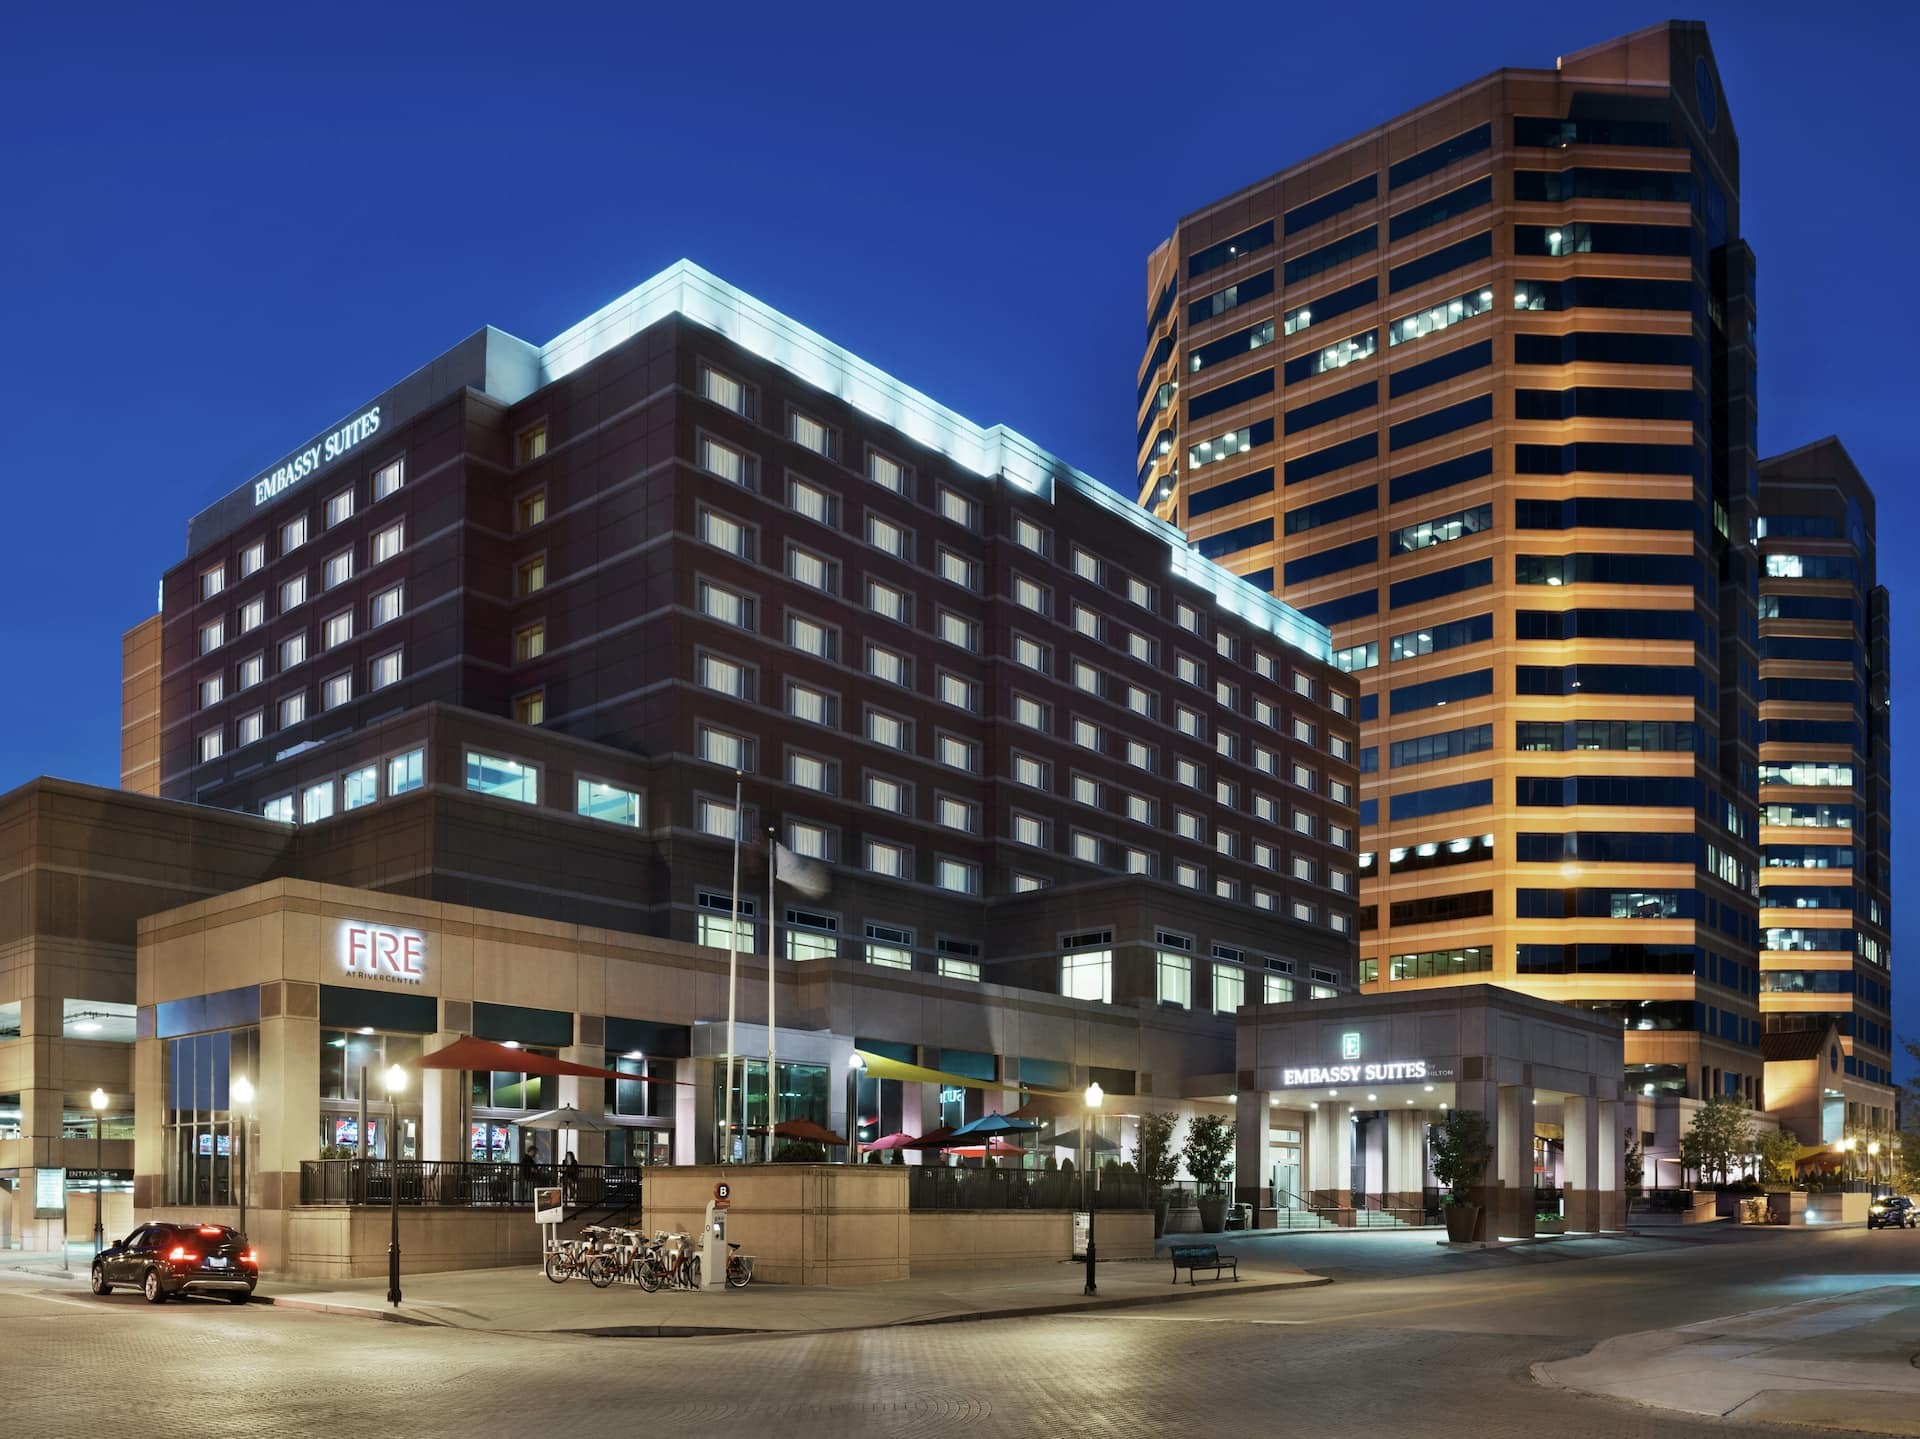 Photo of Embassy Suites by Hilton Cincinnati RiverCenter, Covington, KY